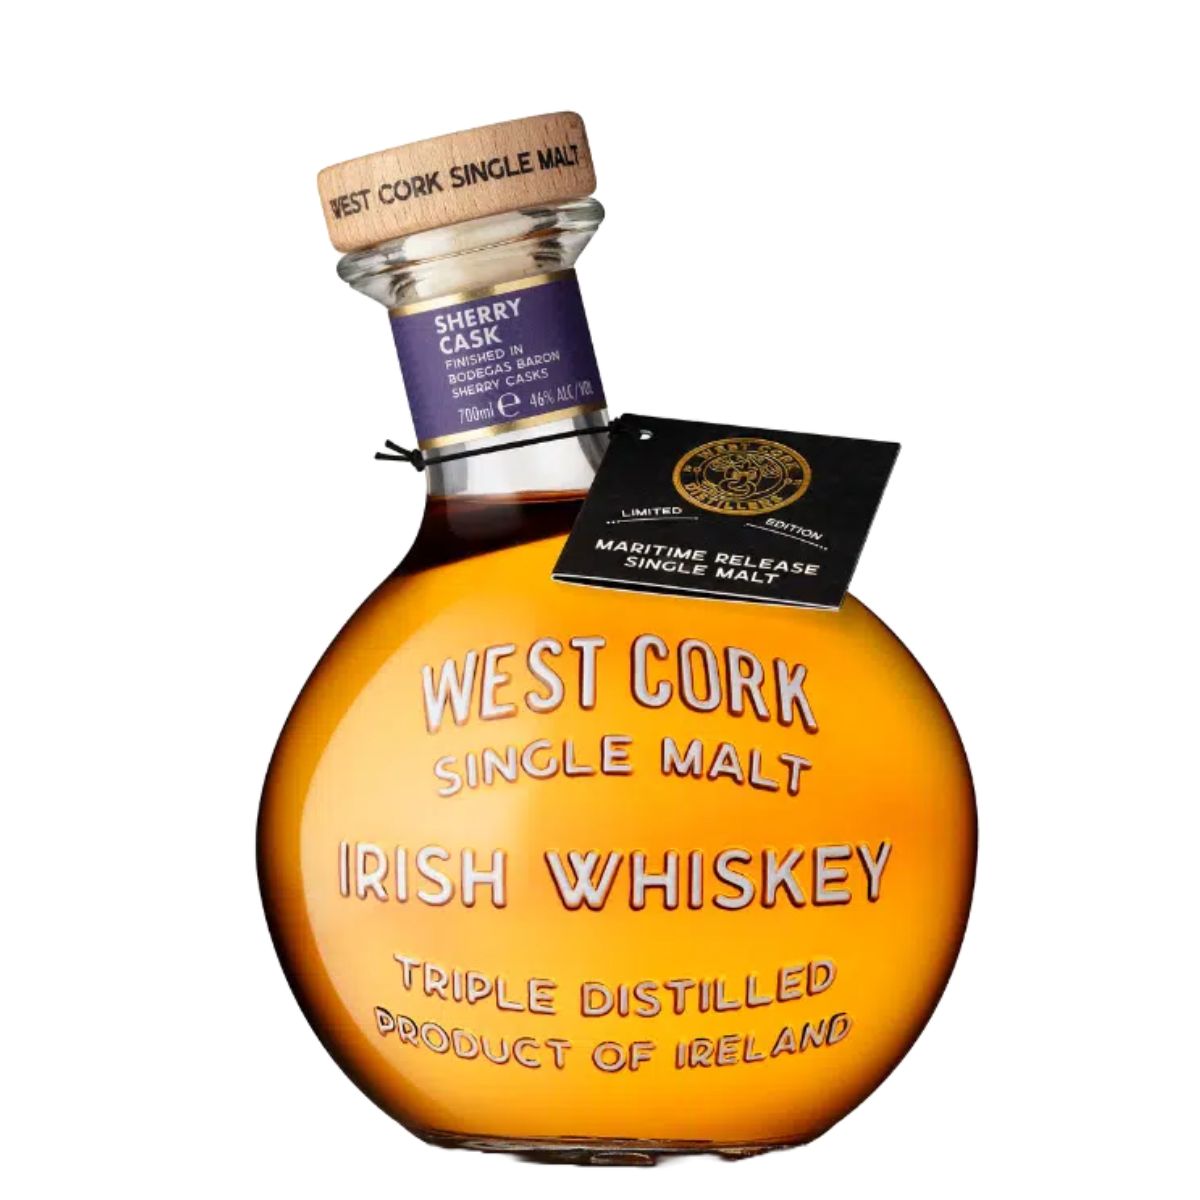 West cork irish